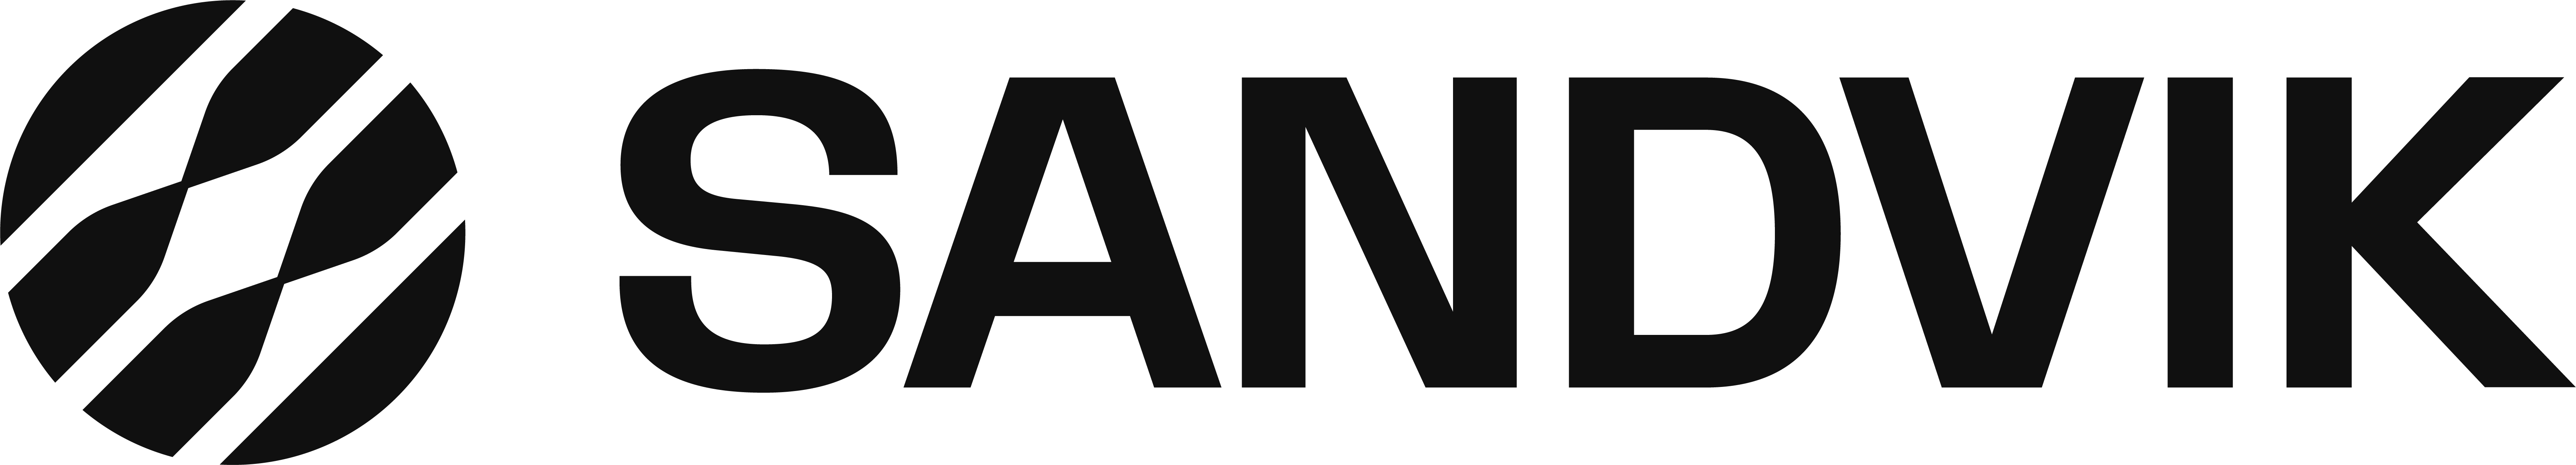 Sandvik Logotype Black Rgb300